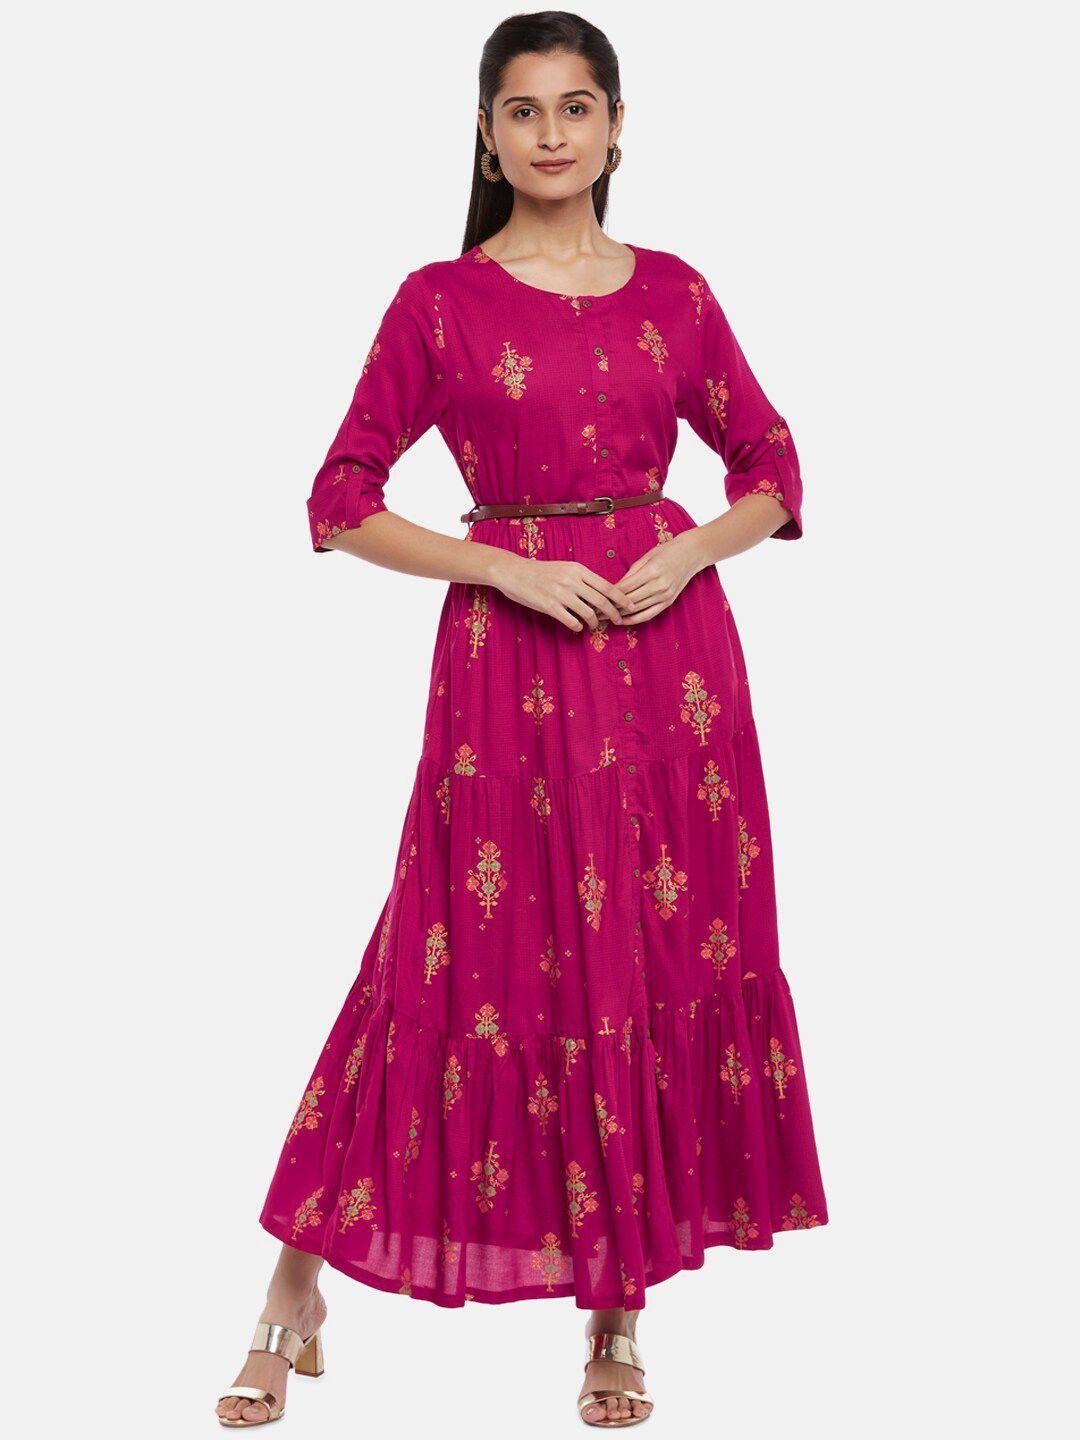 akkriti by pantaloons fuchsia floral ethnic tiered maxi dress